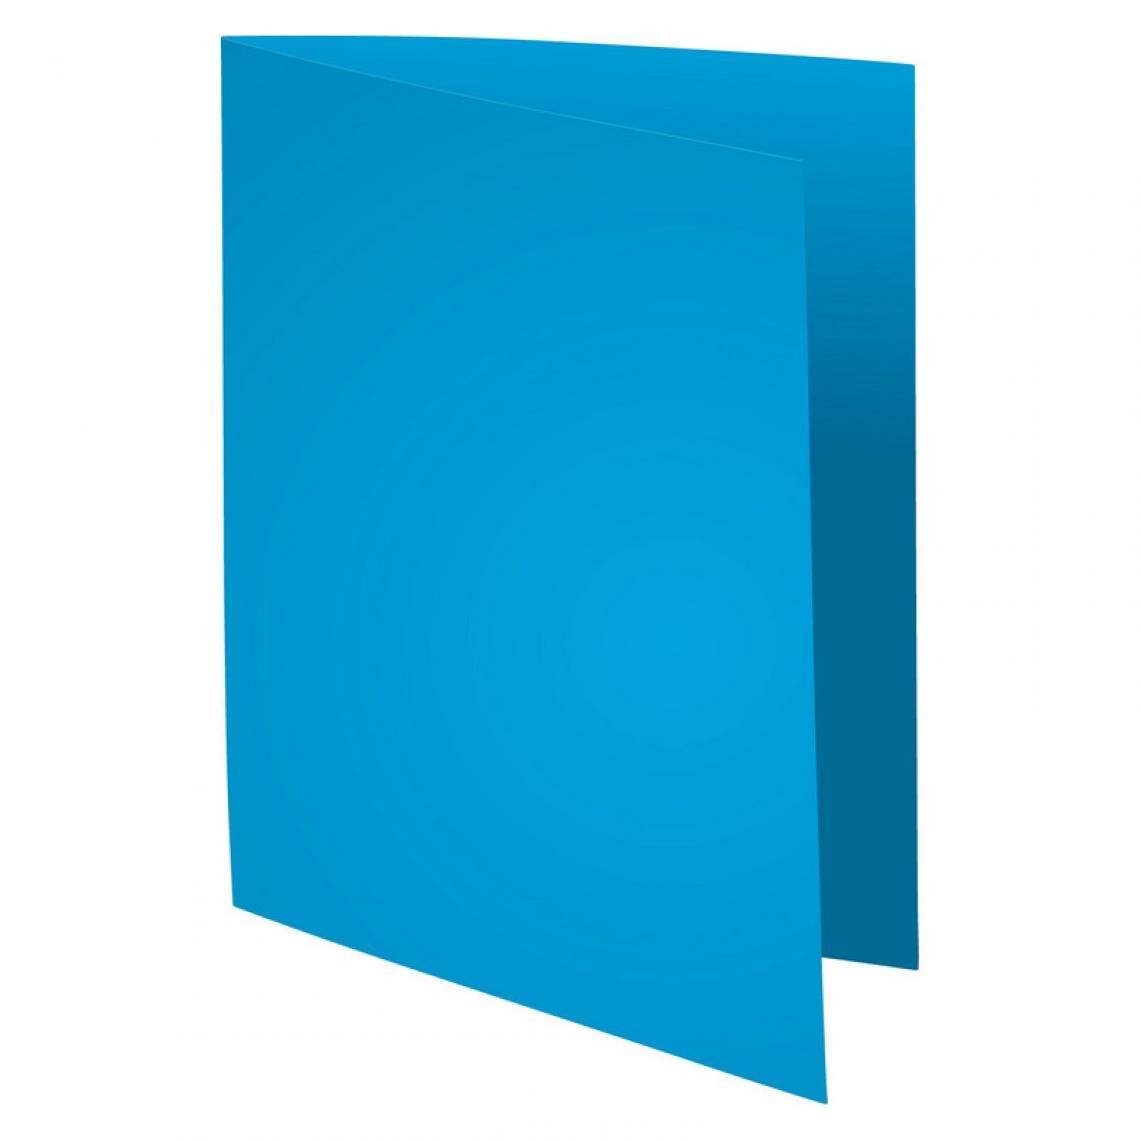 Exacompta - EXACOMPTA Chemises SUPER 250, A4, bleu vif () - Accessoires Bureau